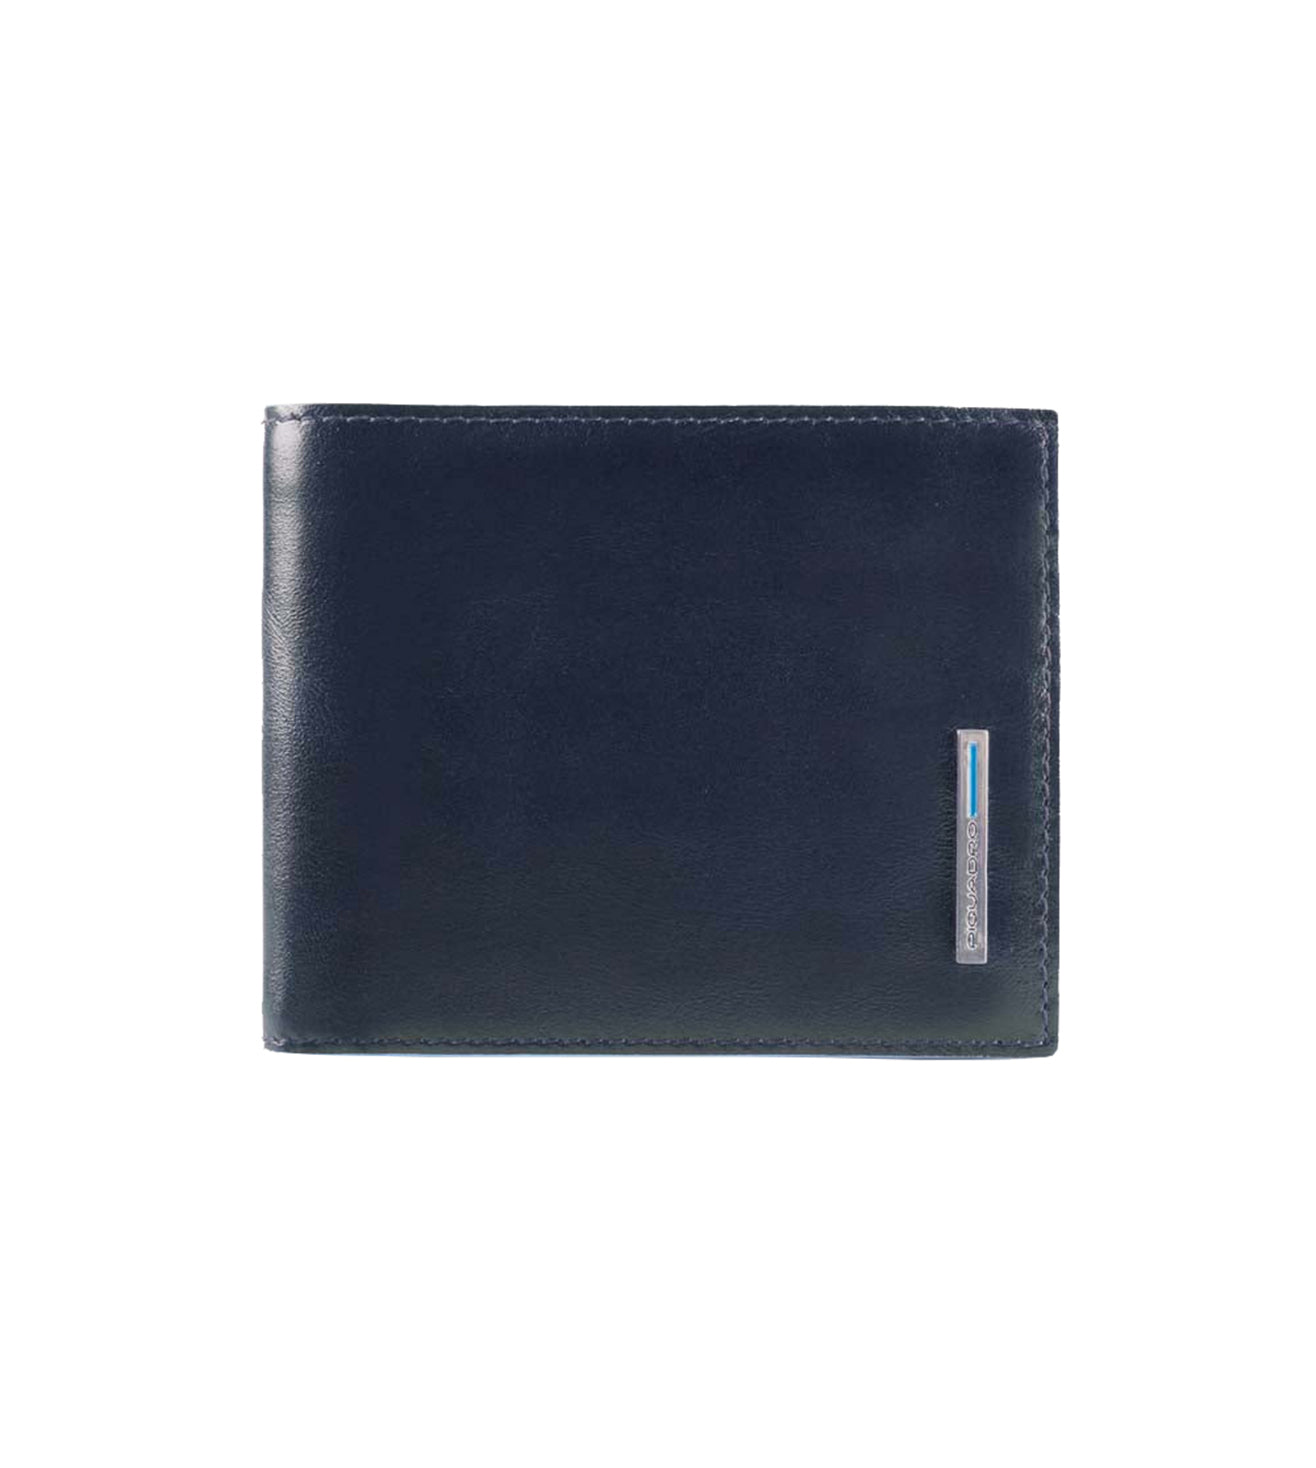 Piquadro Blue Square Men's Night Blue Wallet